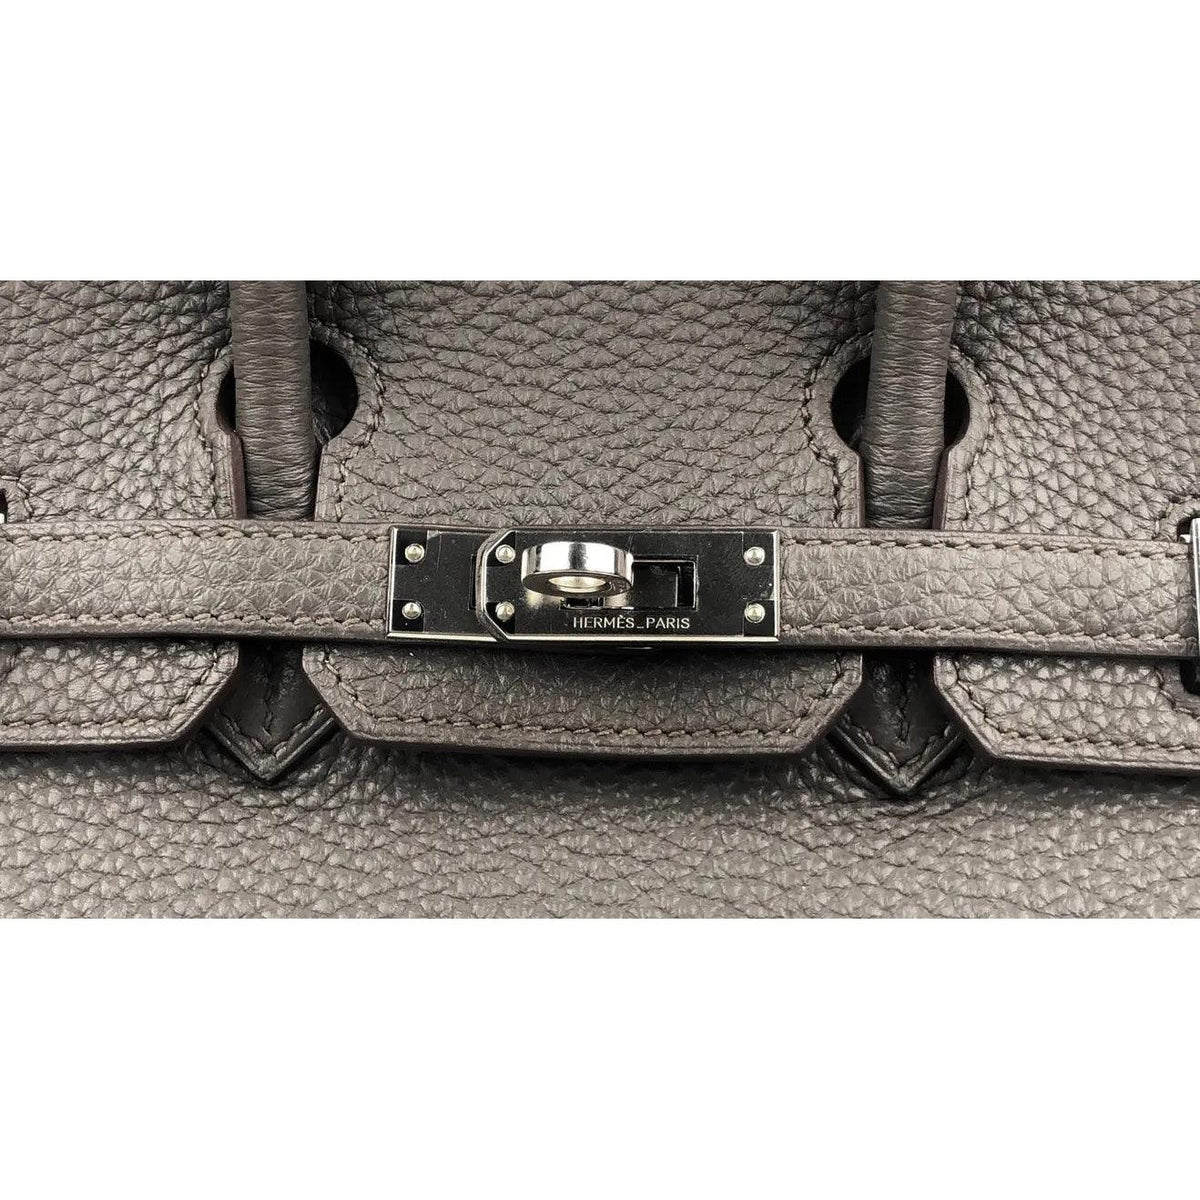 Hermès Birkin Bag RARE Sellier Style in color Gris Etain BNIB